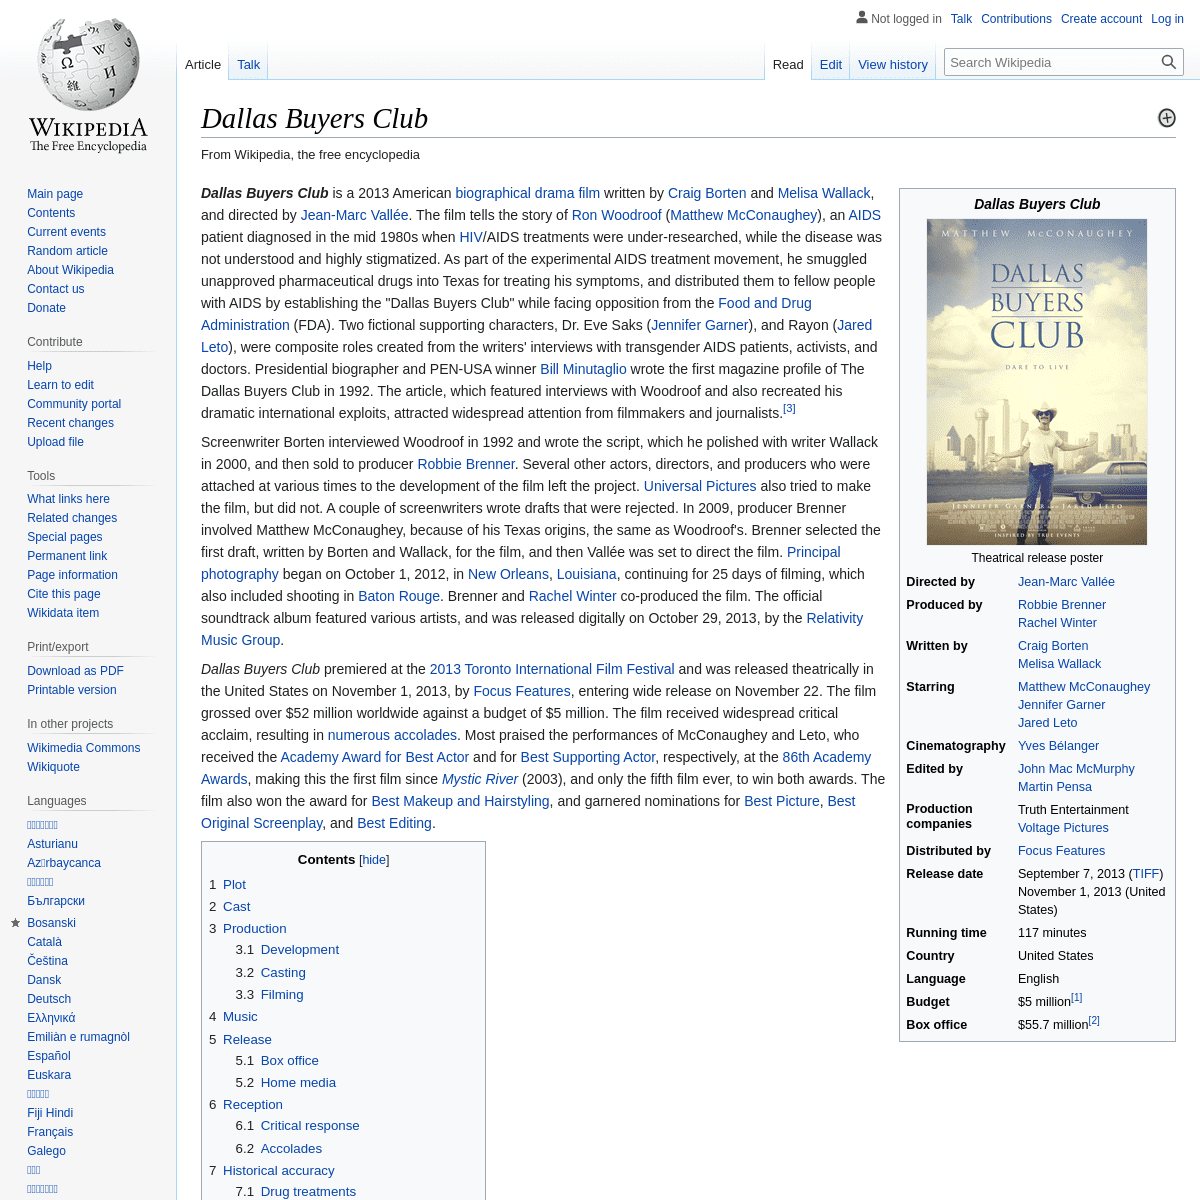 A complete backup of https://en.wikipedia.org/wiki/Dallas_Buyers_Club